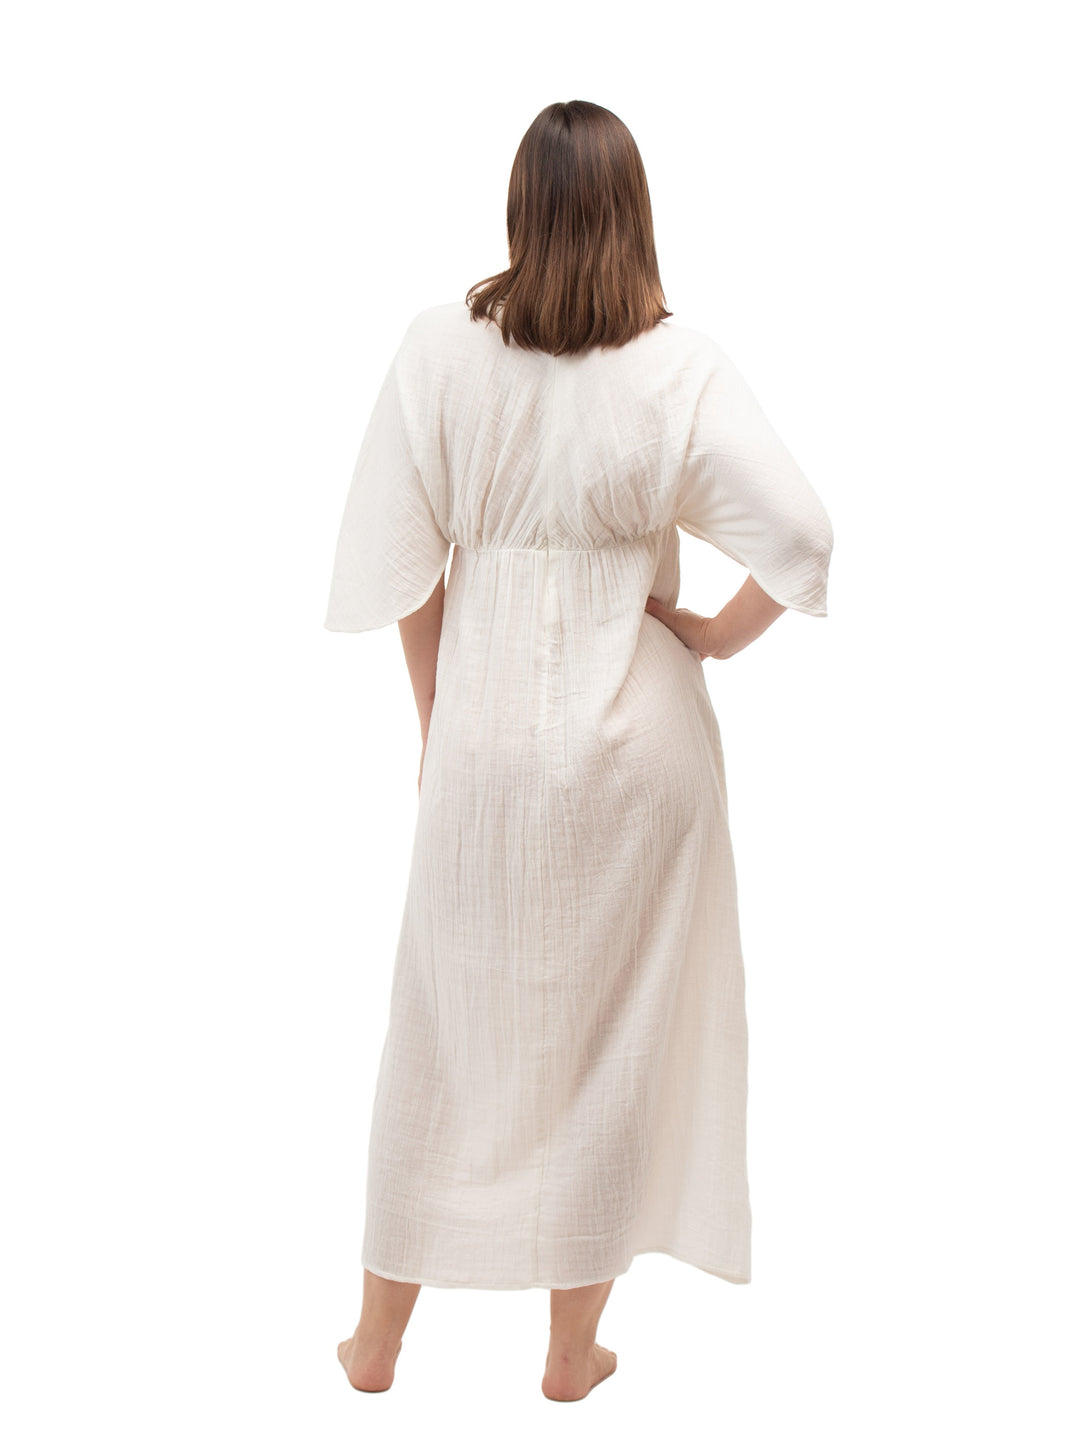 Beau & Ro Apparel The Logan Dress | White Gauze